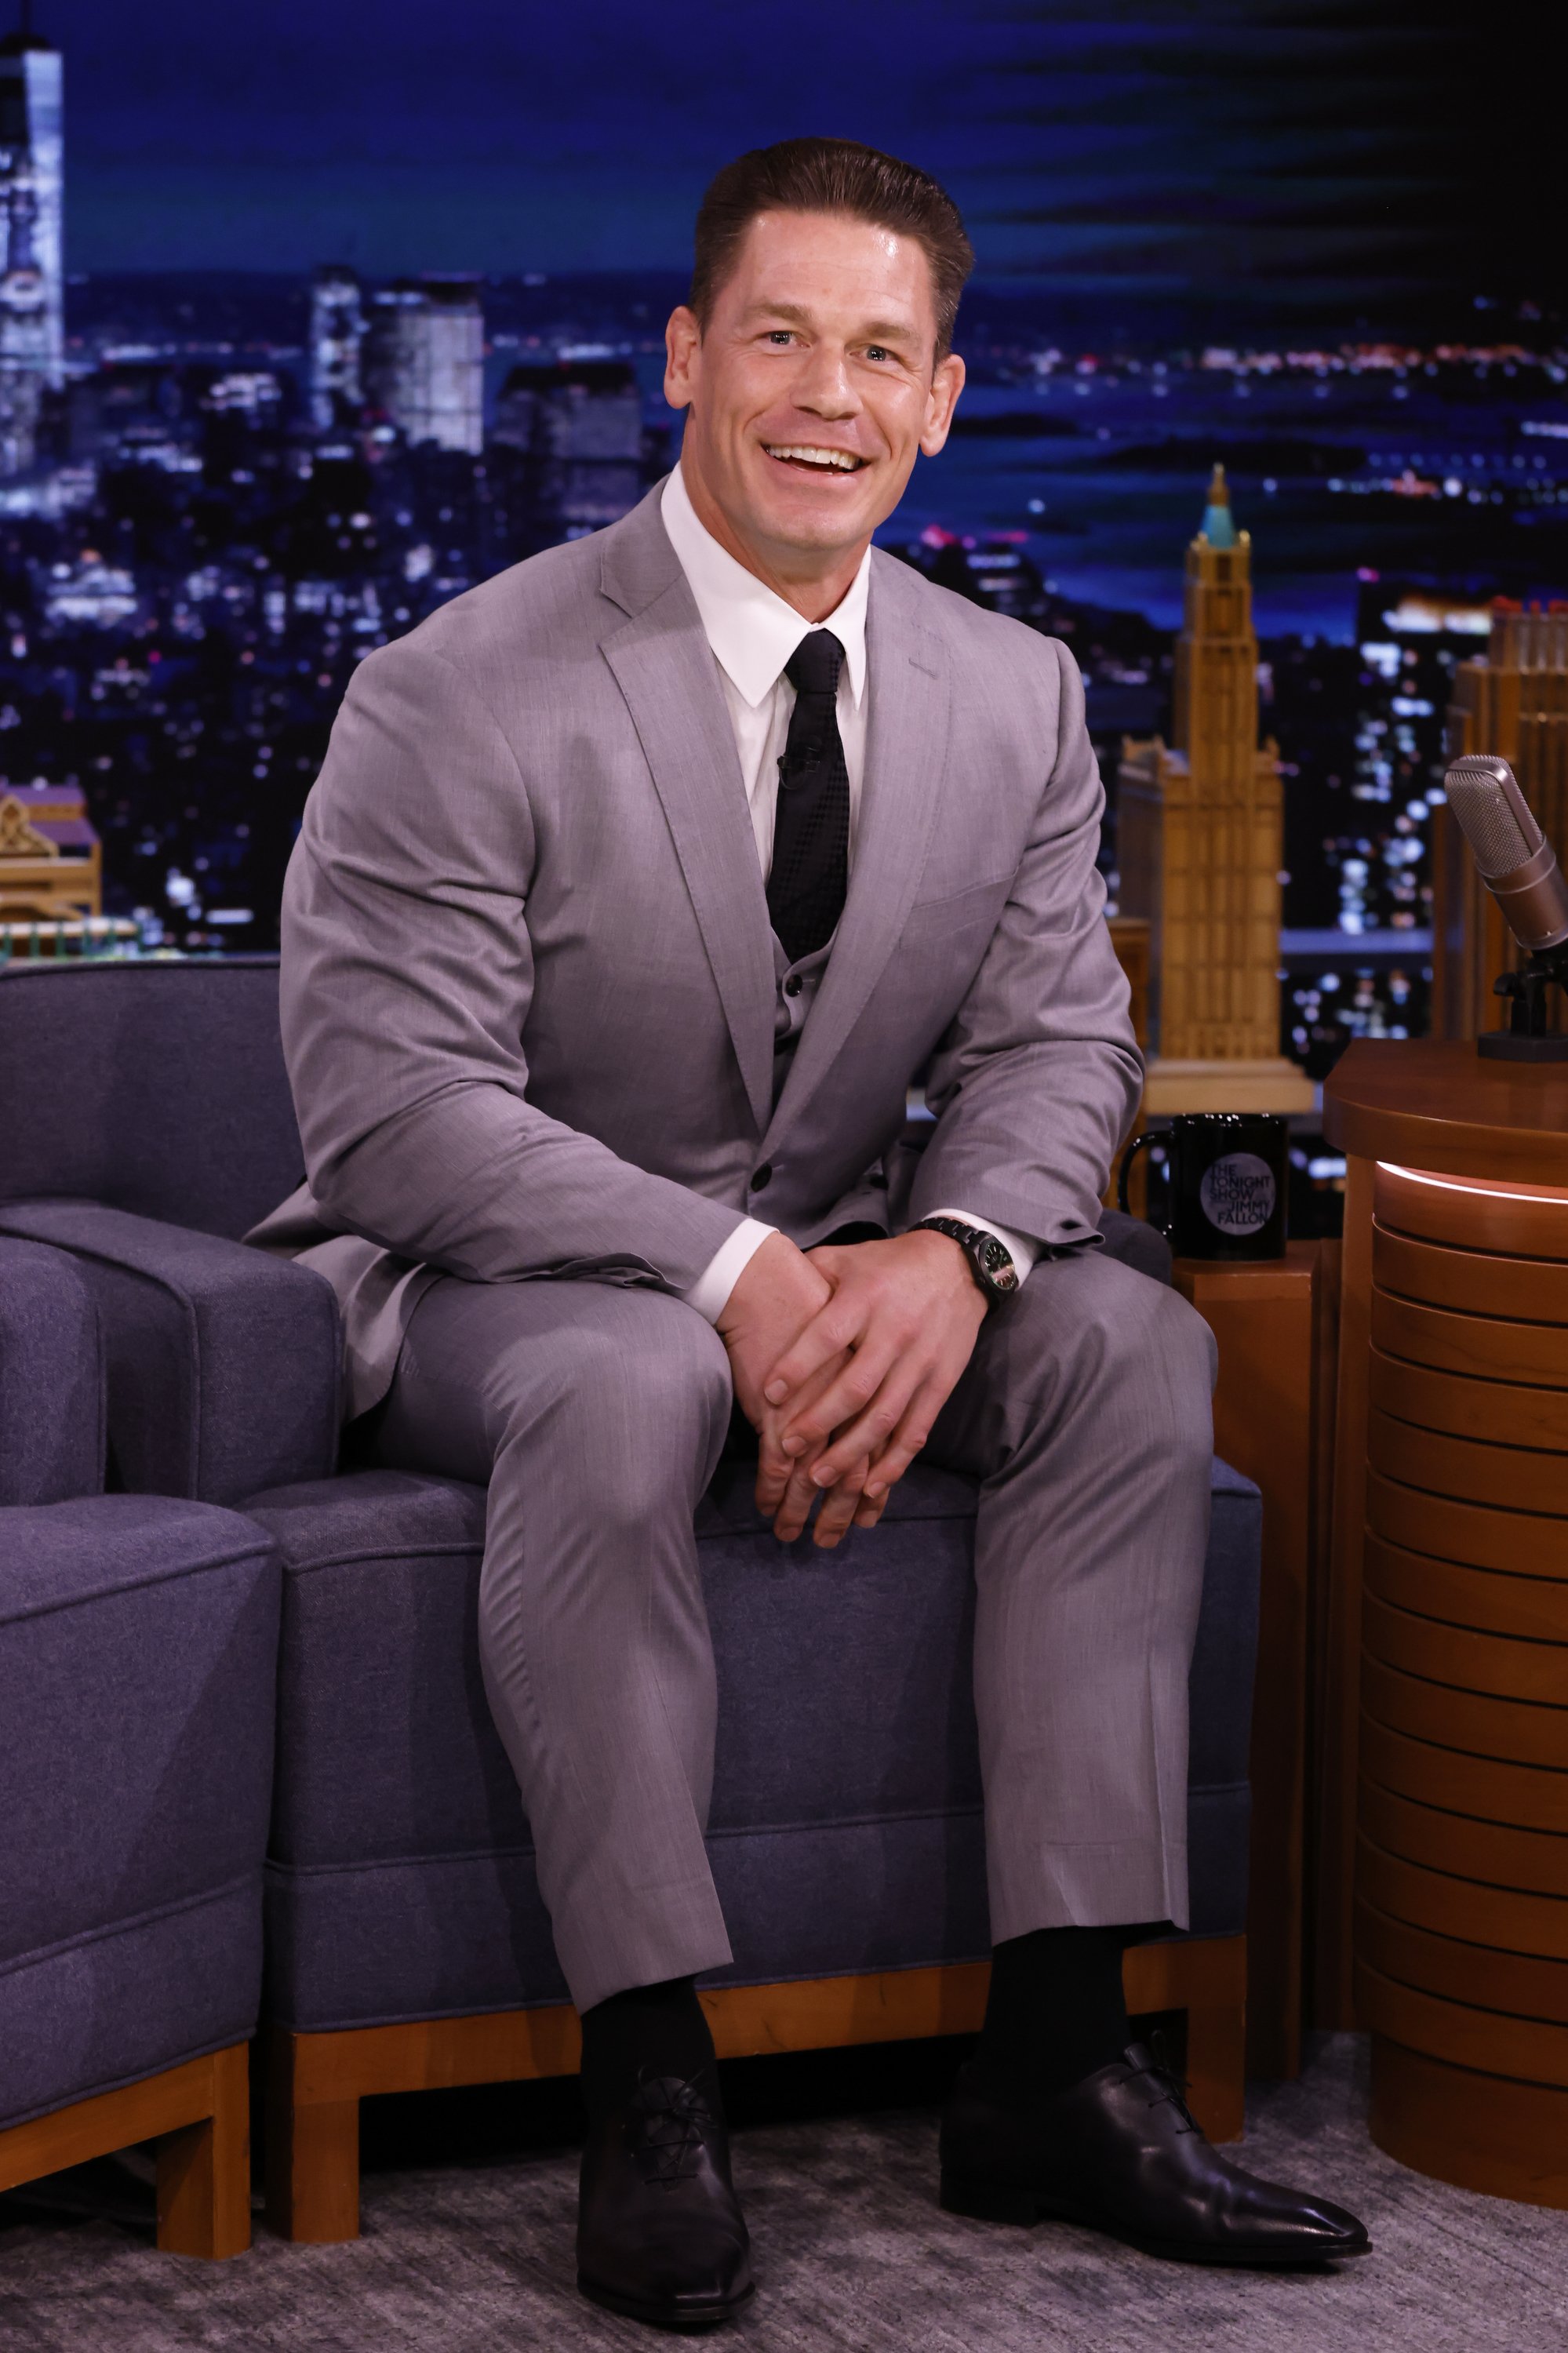 John Cena on "The Tonight Show Starring Jimmy Fallon" on Thursday, September 9, 2021. | Source: Getty Images